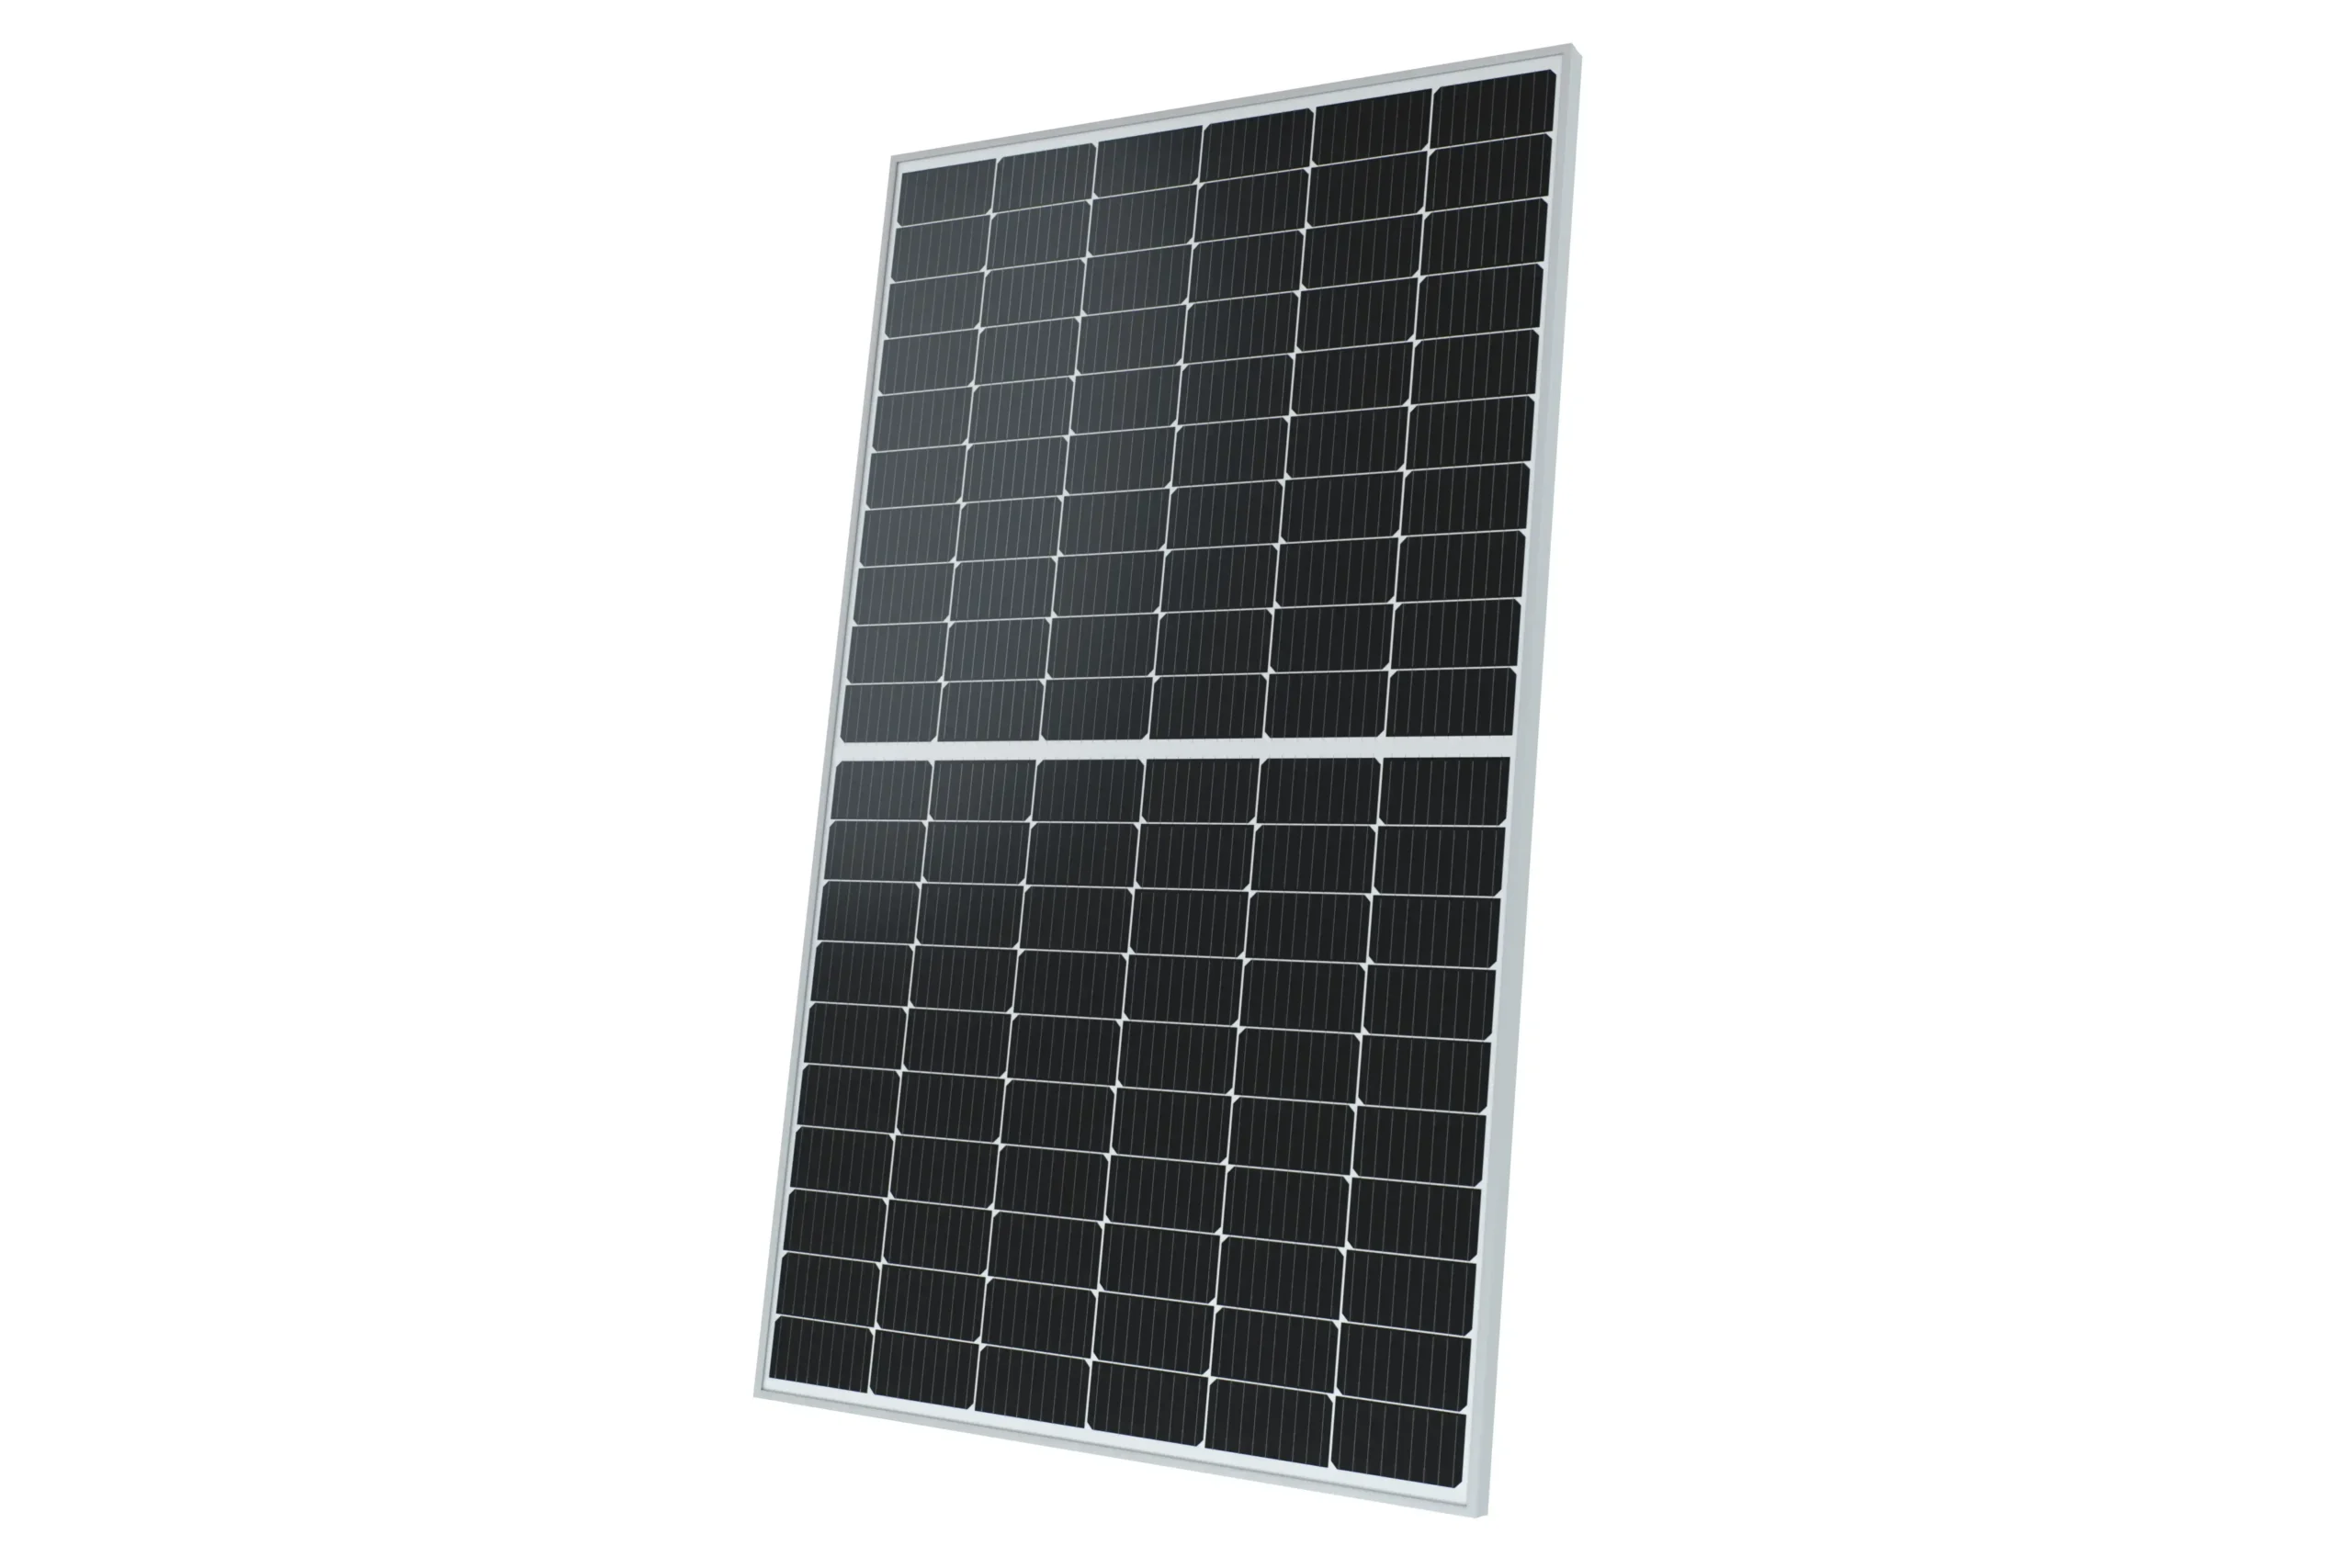 Solarwatt Panel Vision Gm 3.0 Pure Perspektive